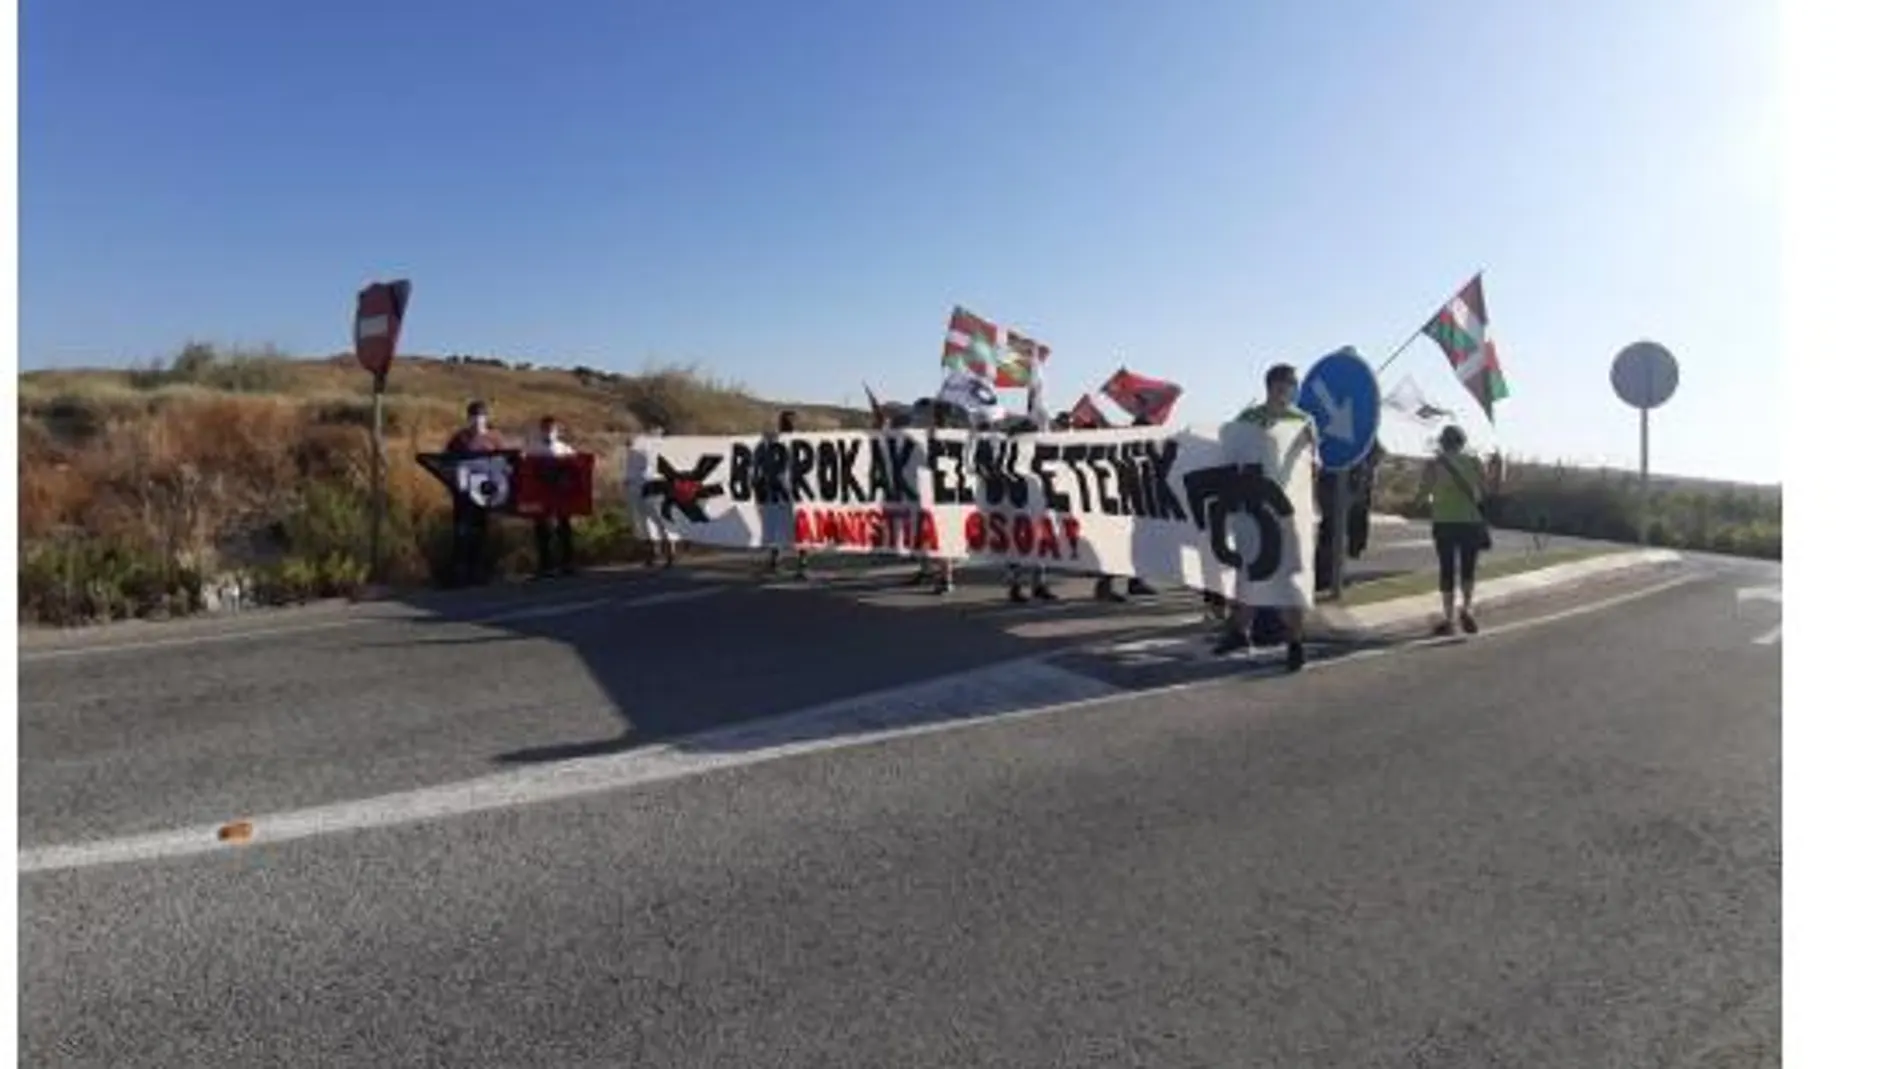 Protesta frente a la cárcel de Murcia